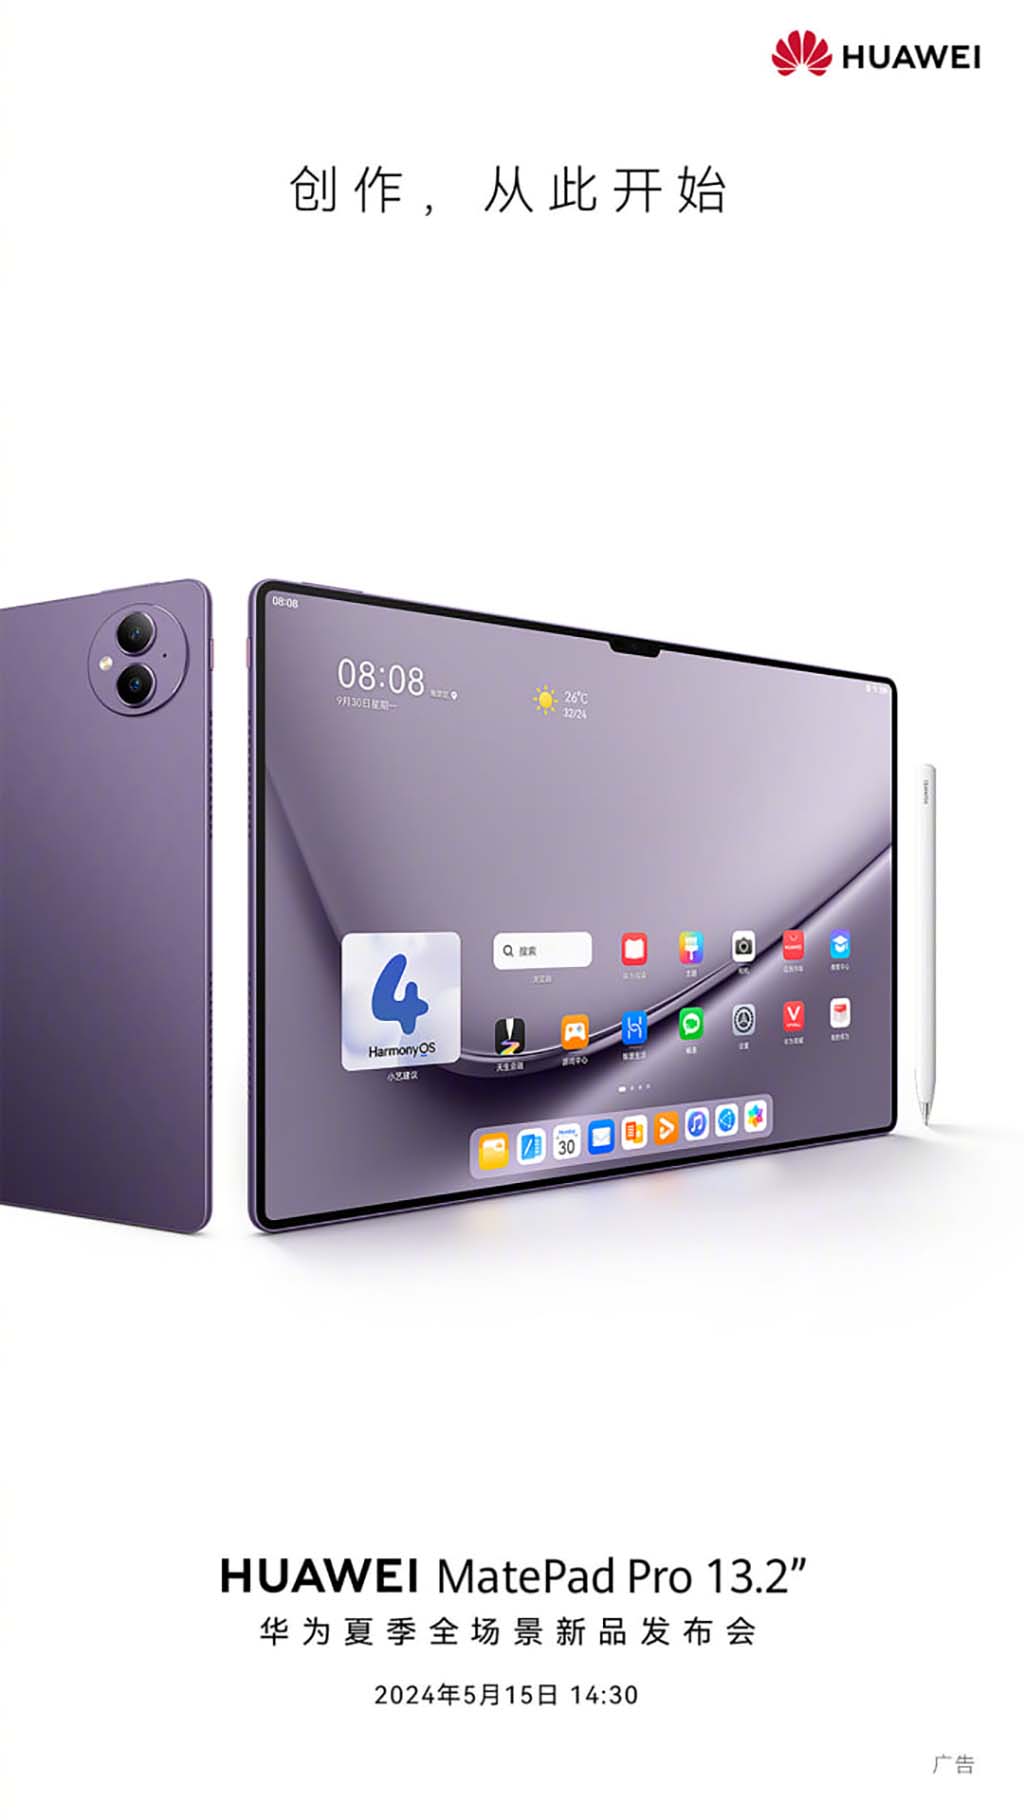 Huawei MatePad Pro 13.2 color